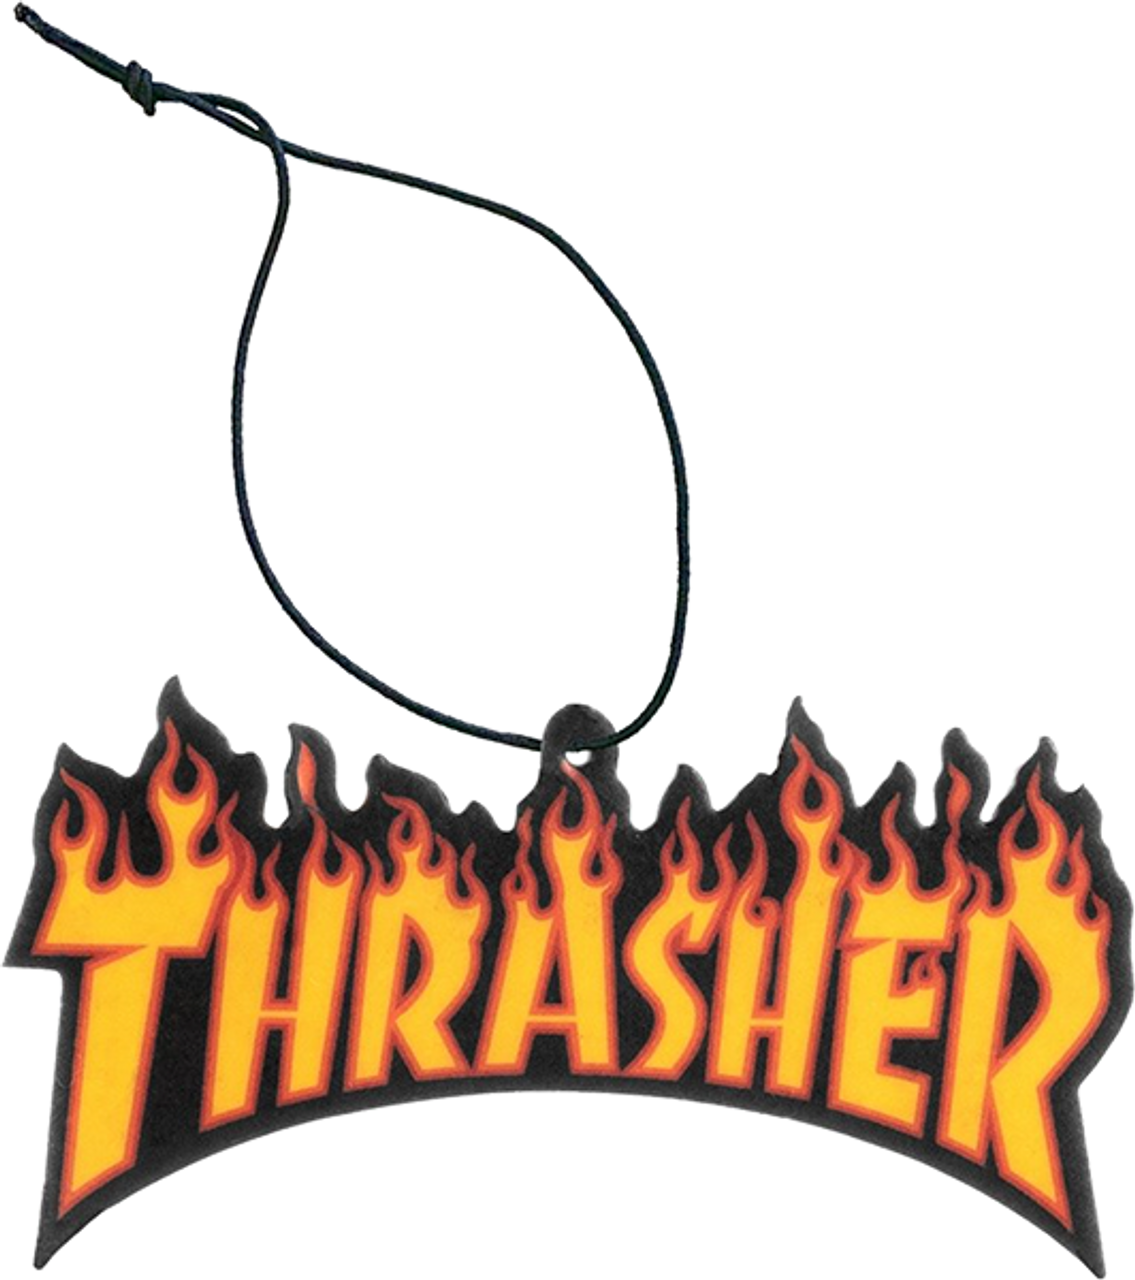 THRASHER FLAME LOGO AIR FRESHENER